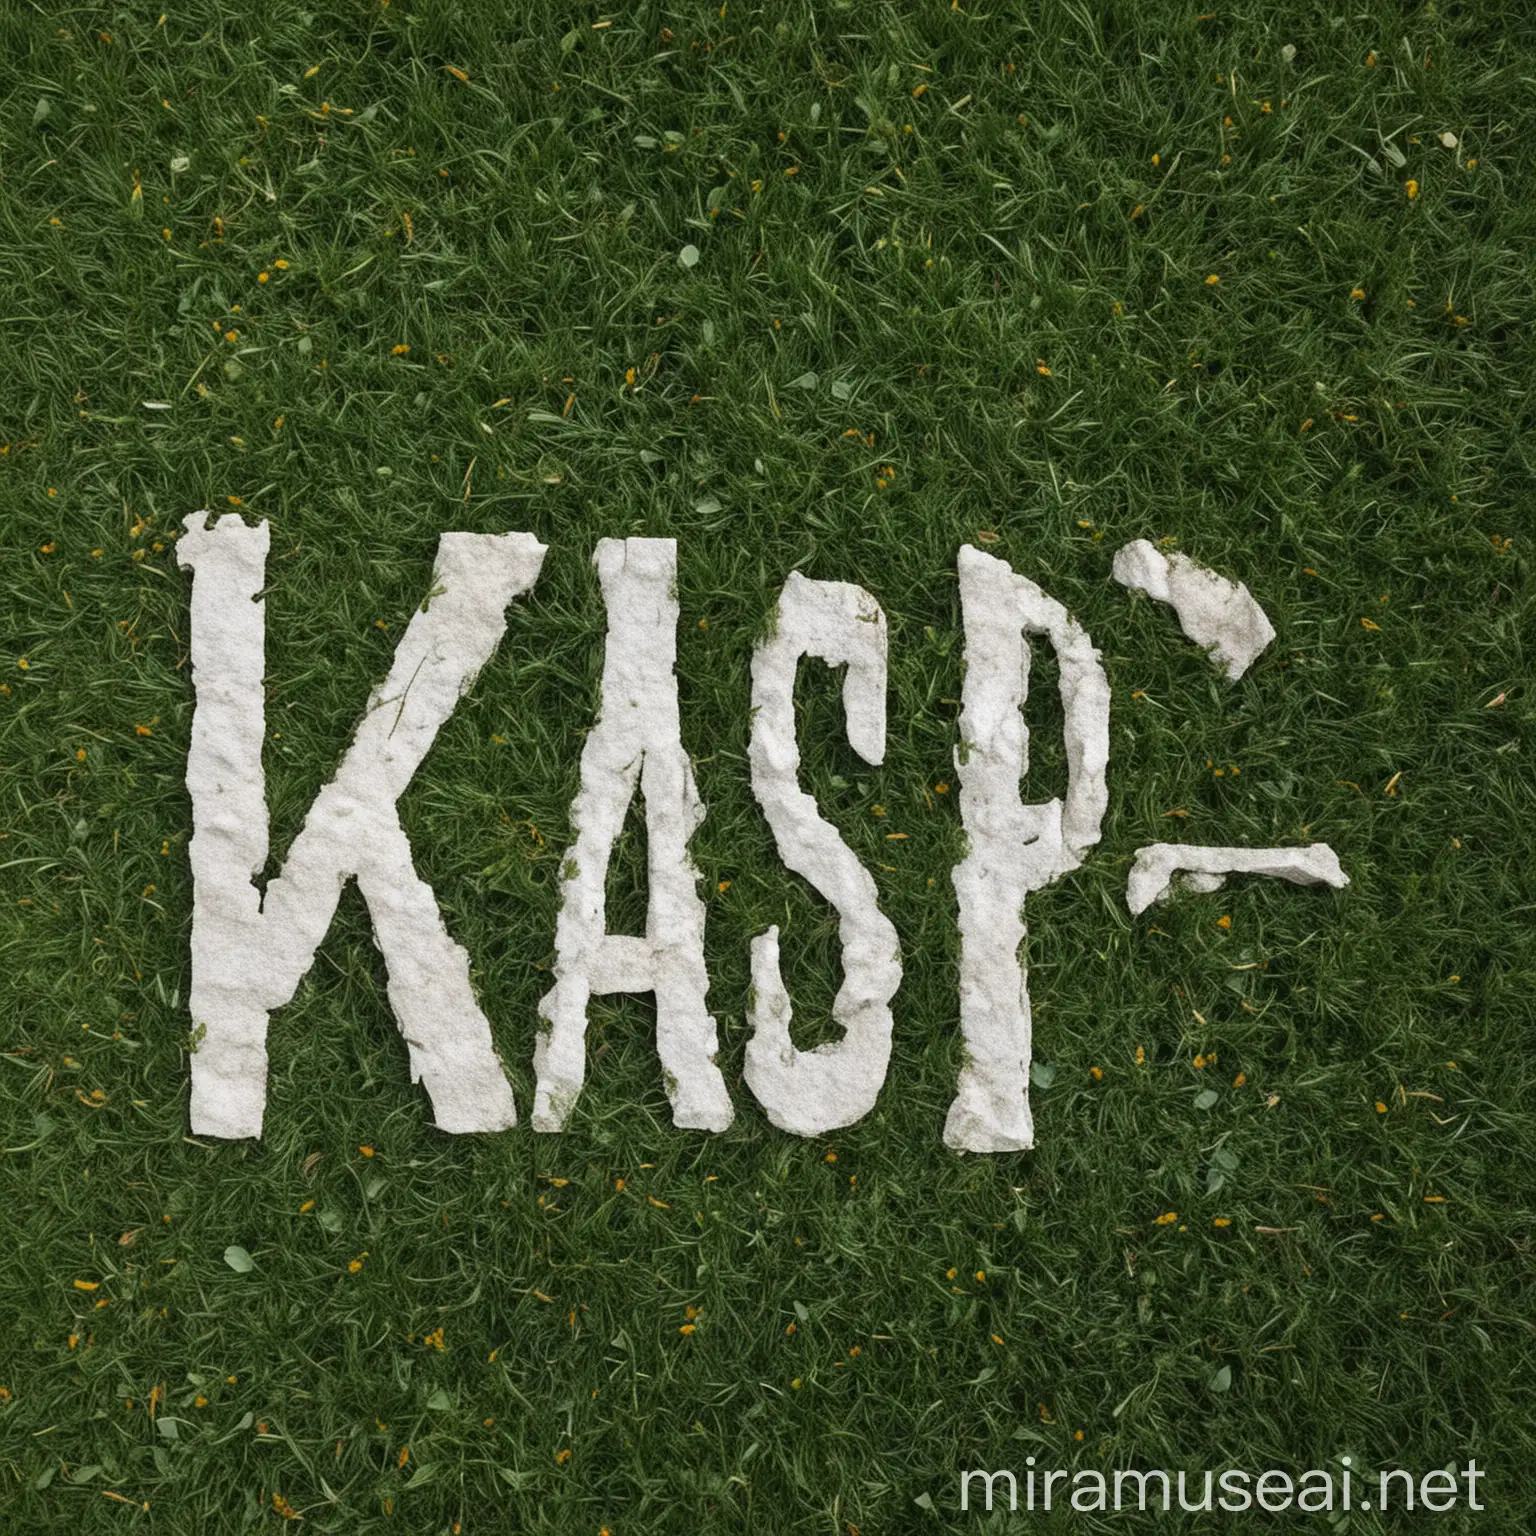 White Rock KASP Word on Grass